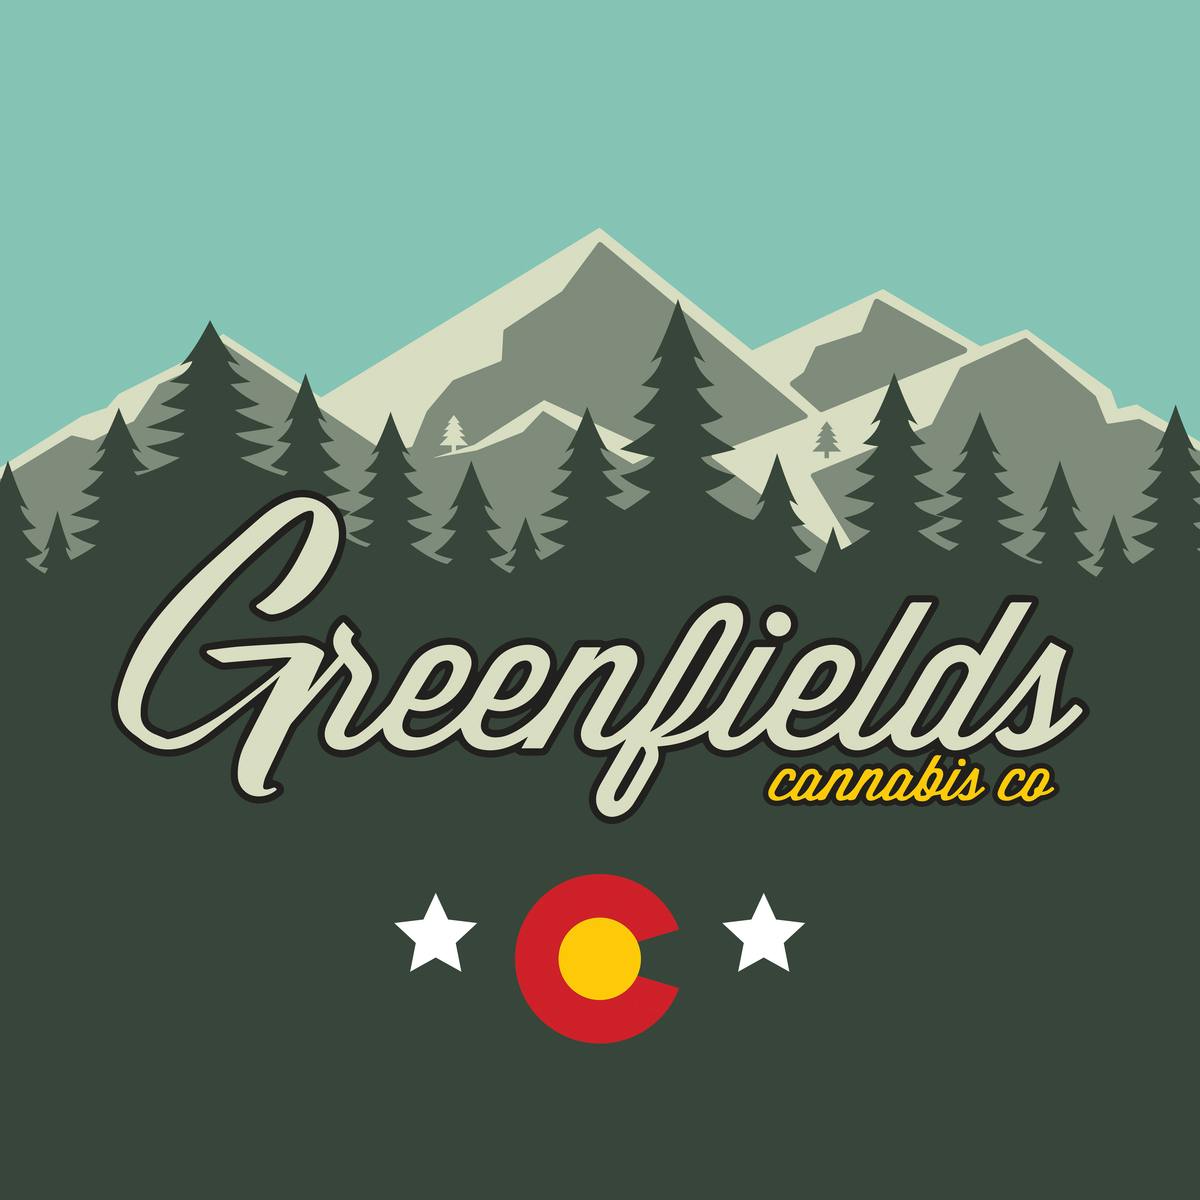 Greenfields Cannabis Co.-logo